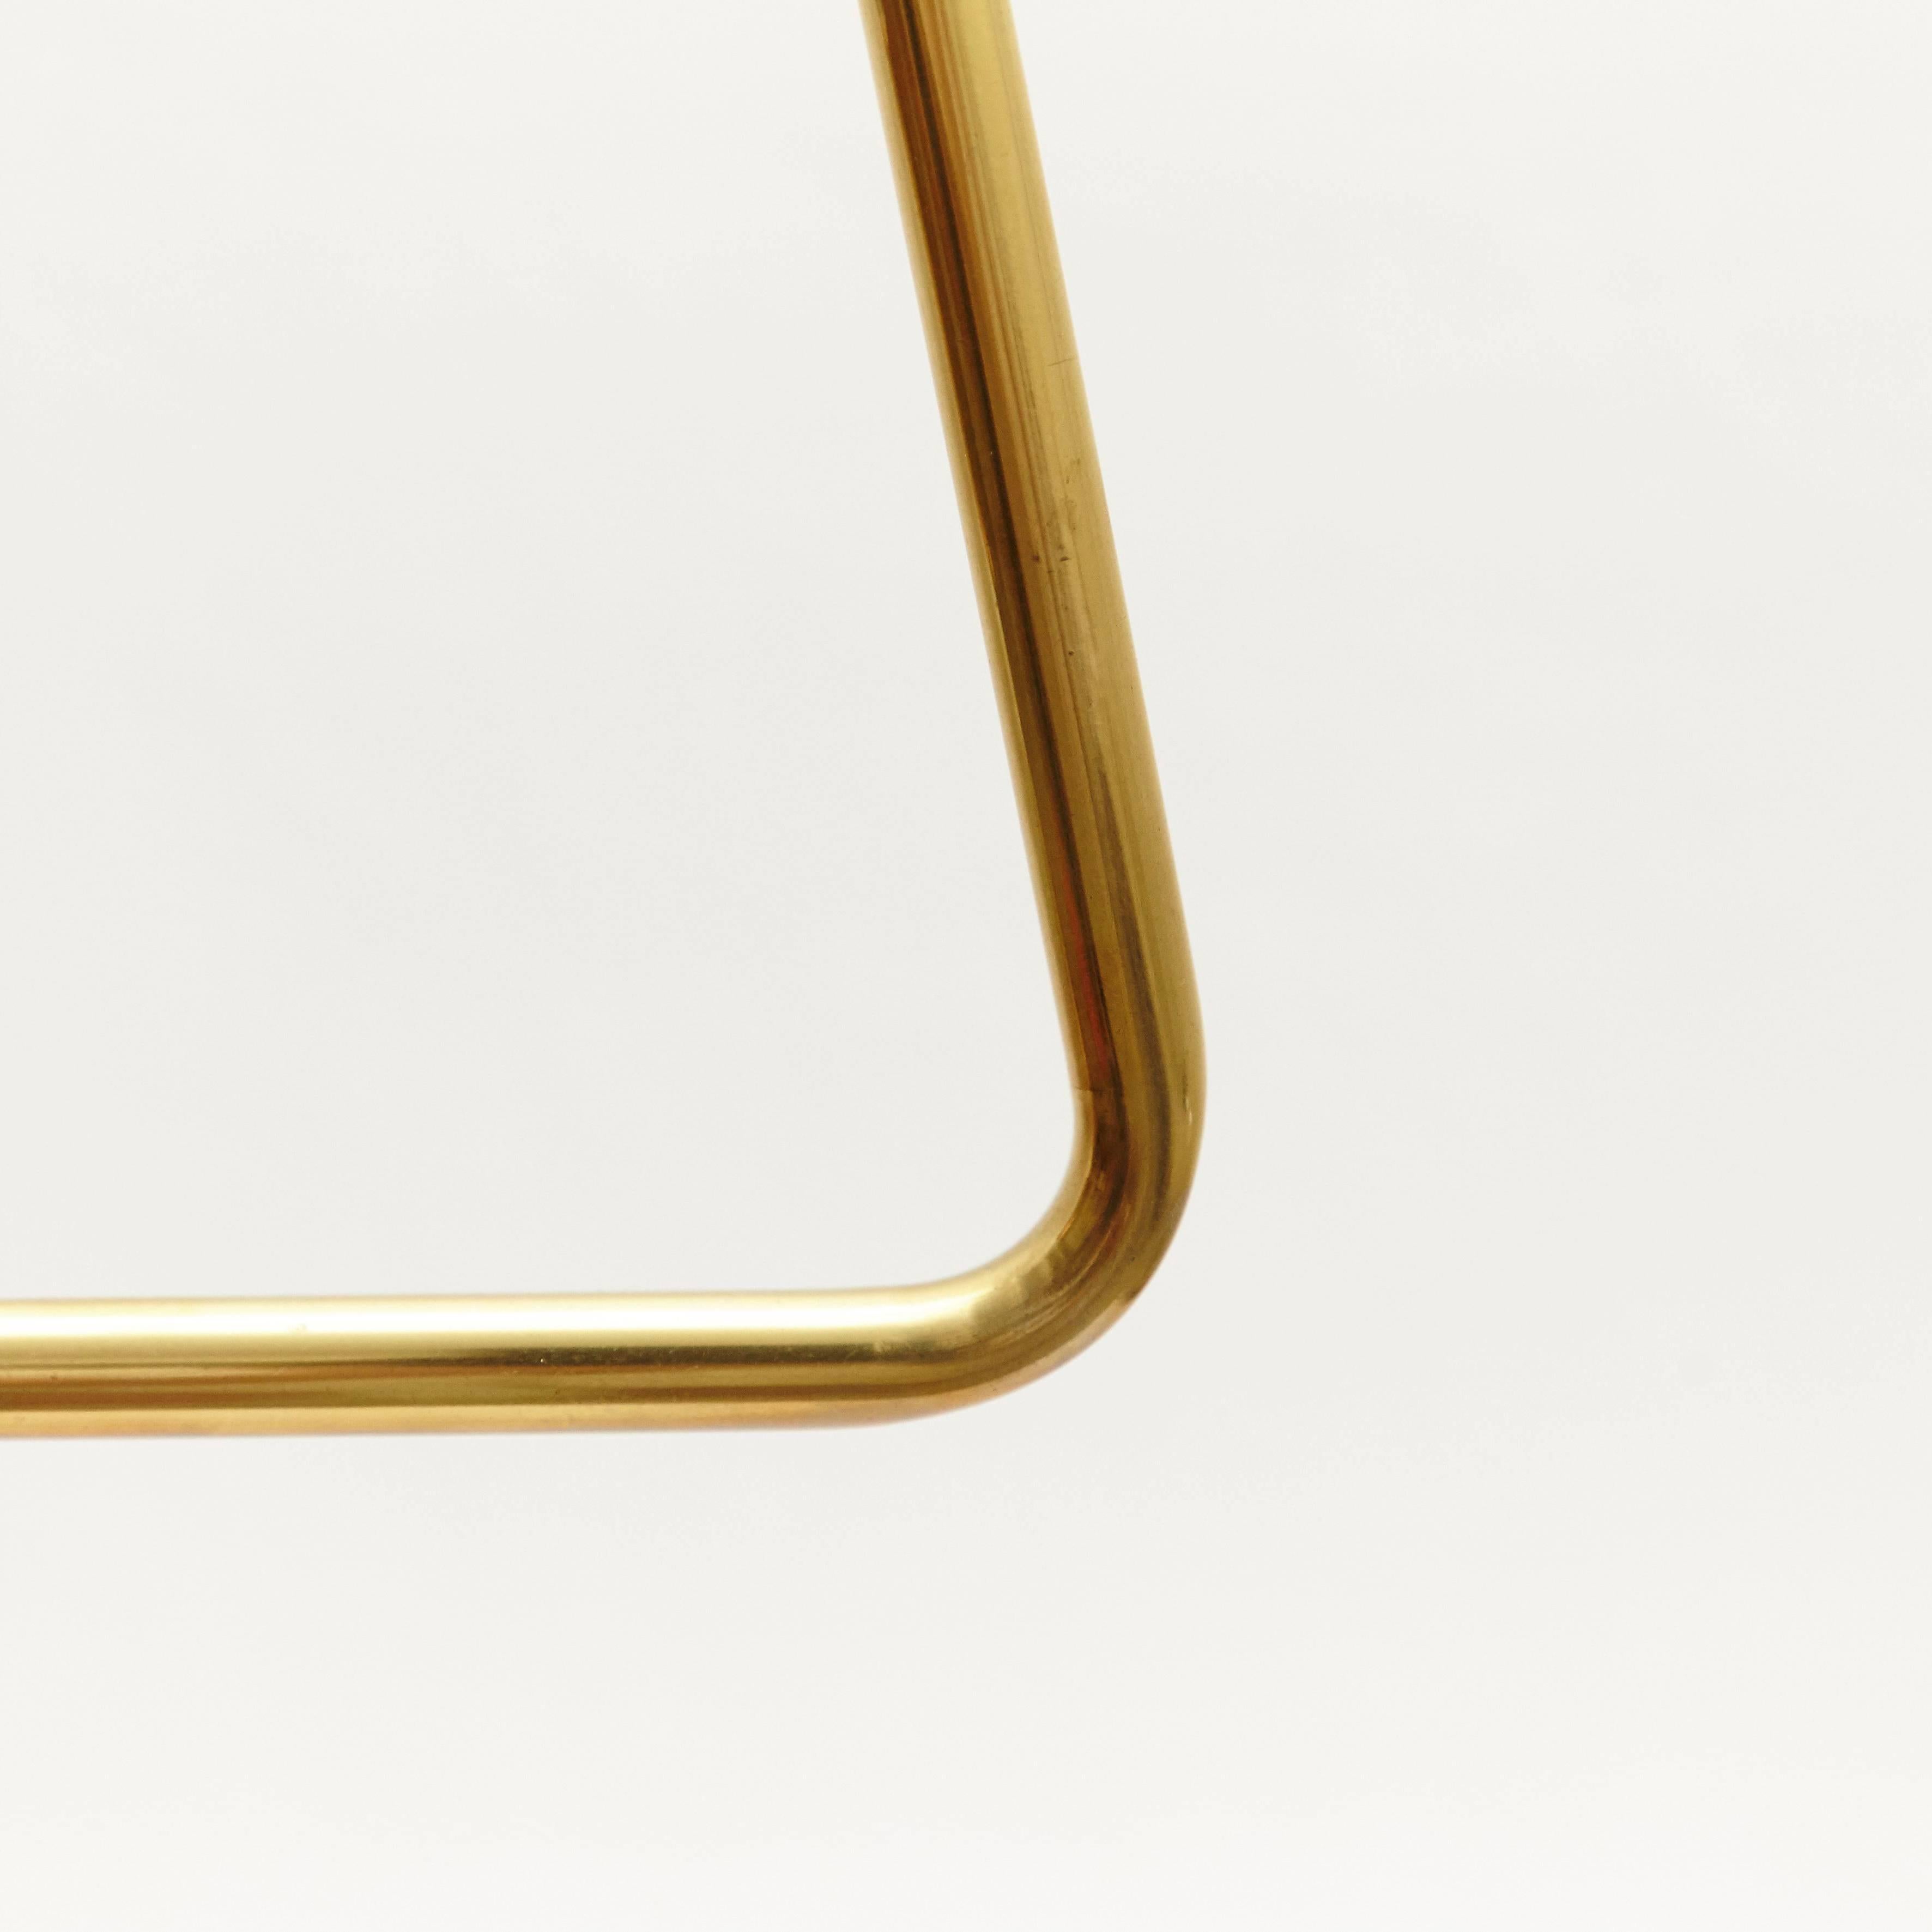 Spanish Adolfo Abejon Contemporary Design 'Slim Brass' Lamp Prototype in Brass, 2016